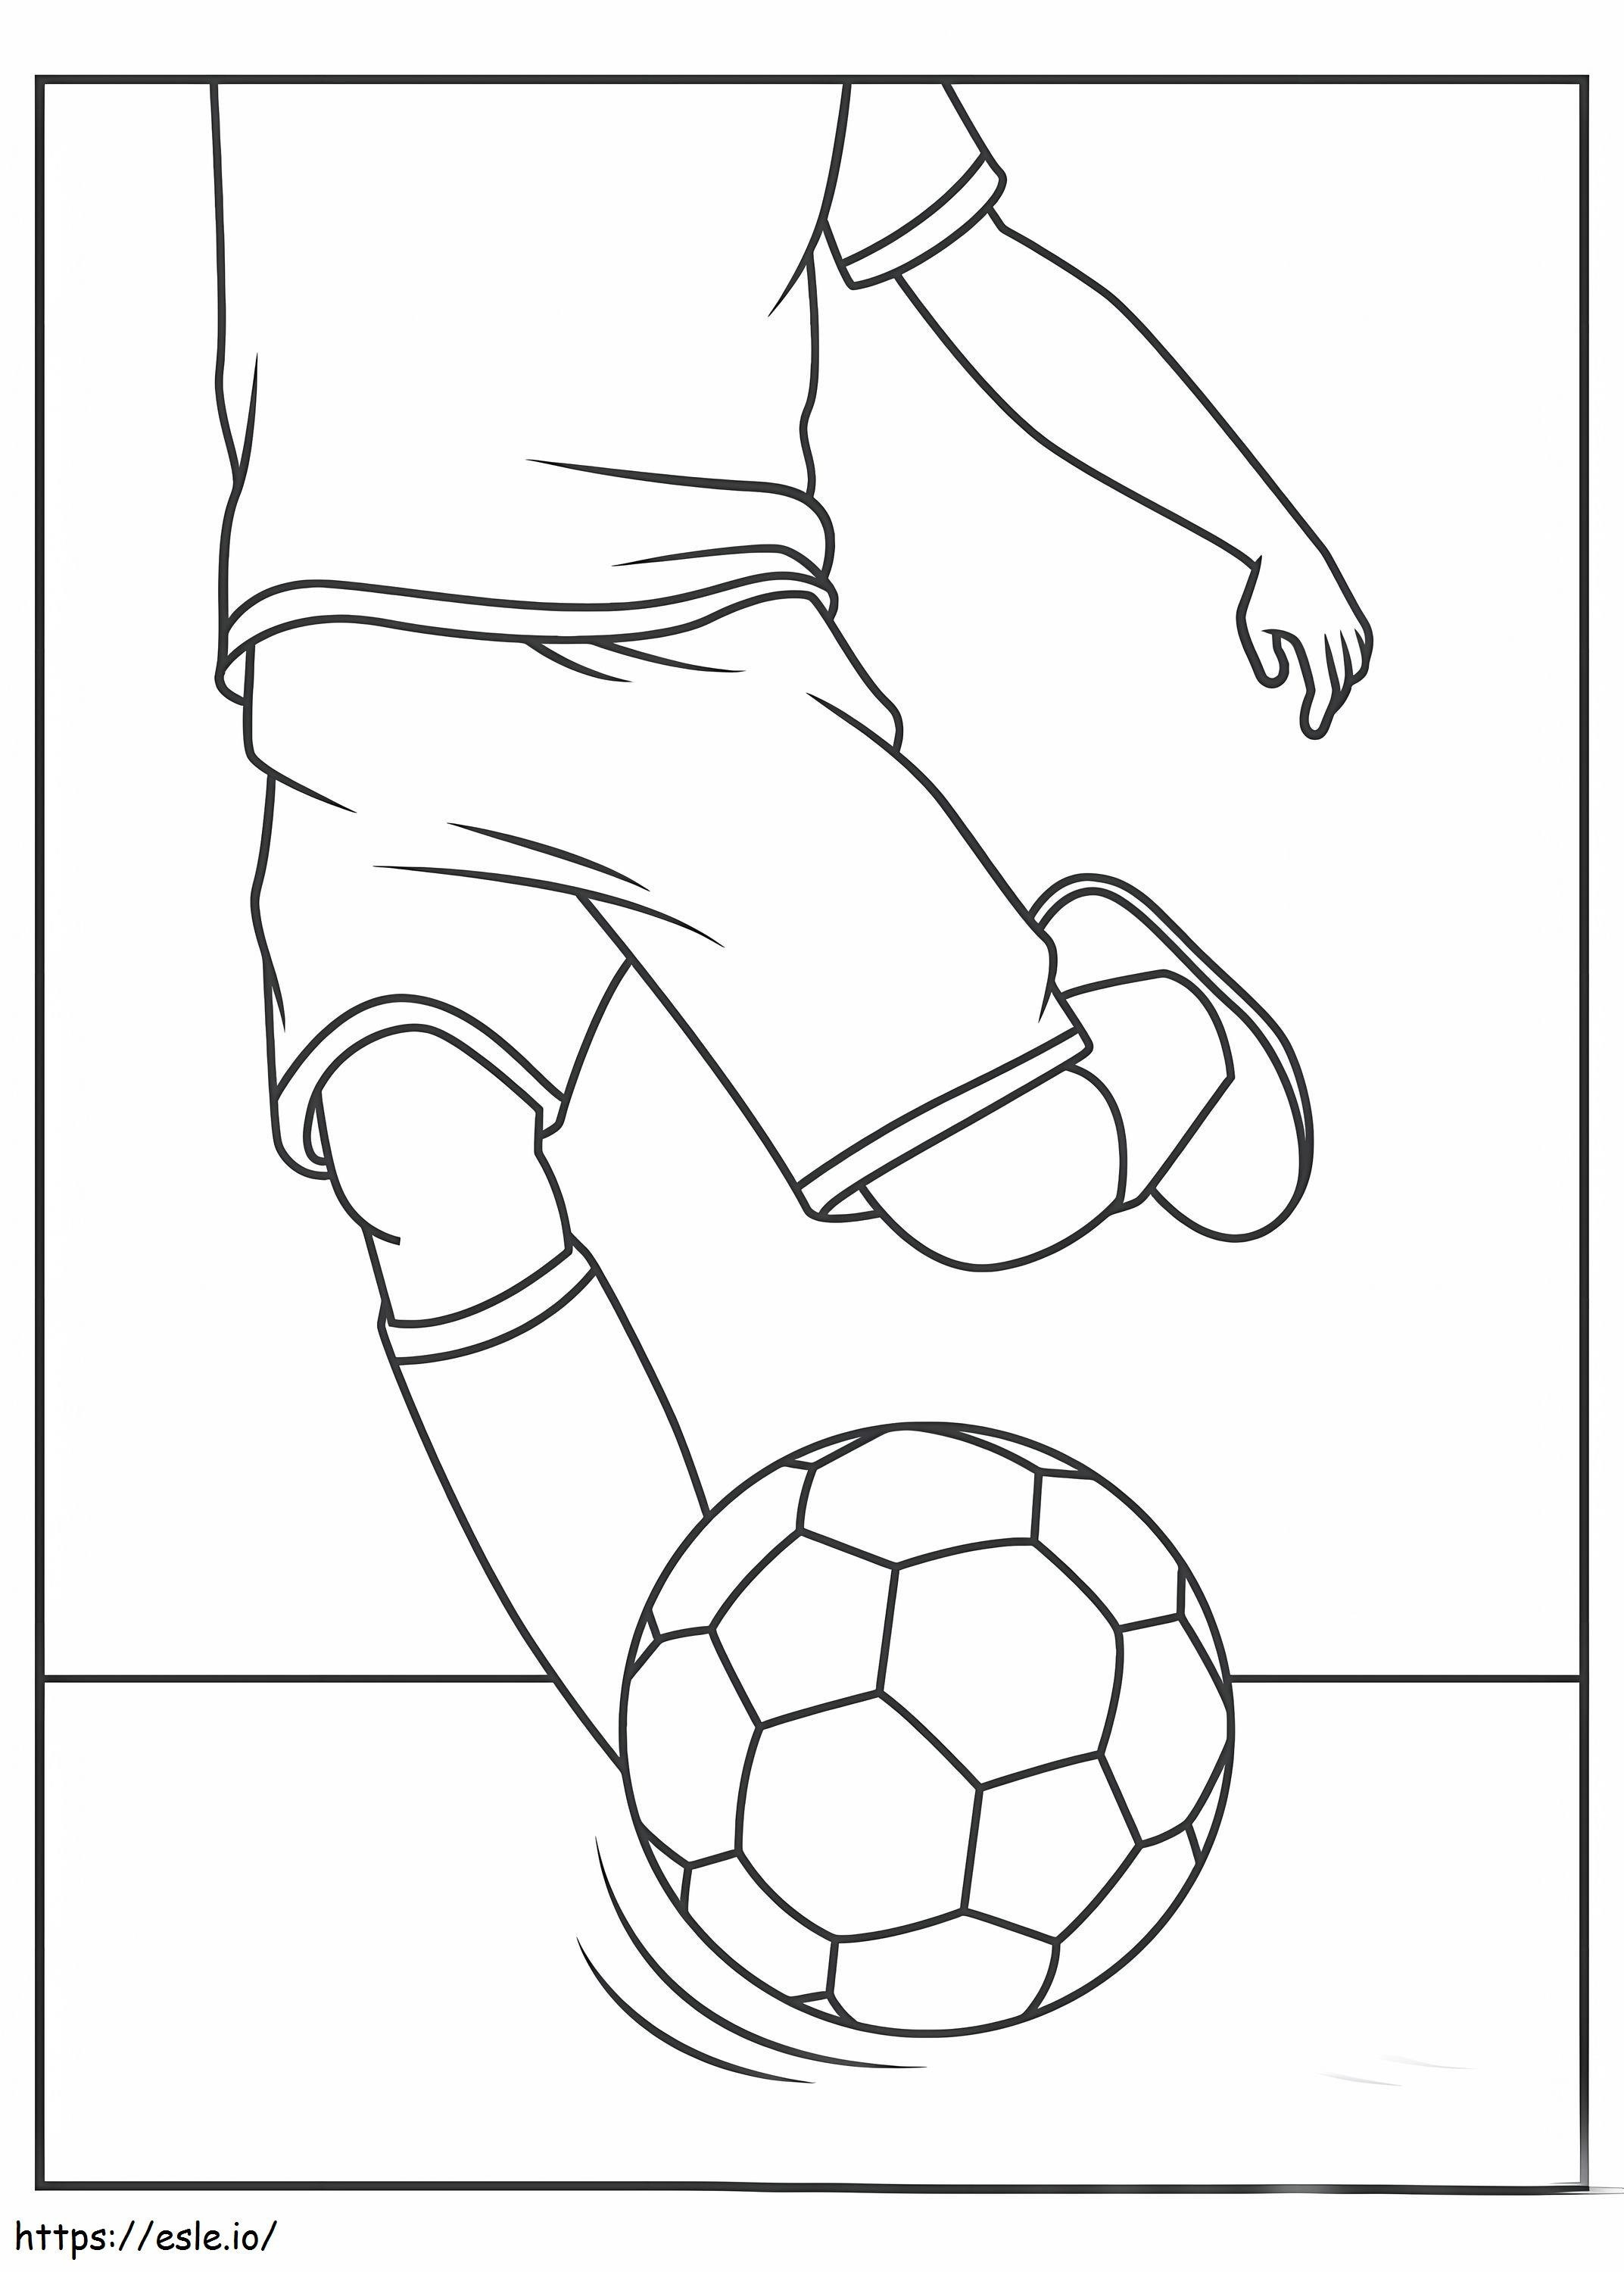 Kick The Ball coloring page